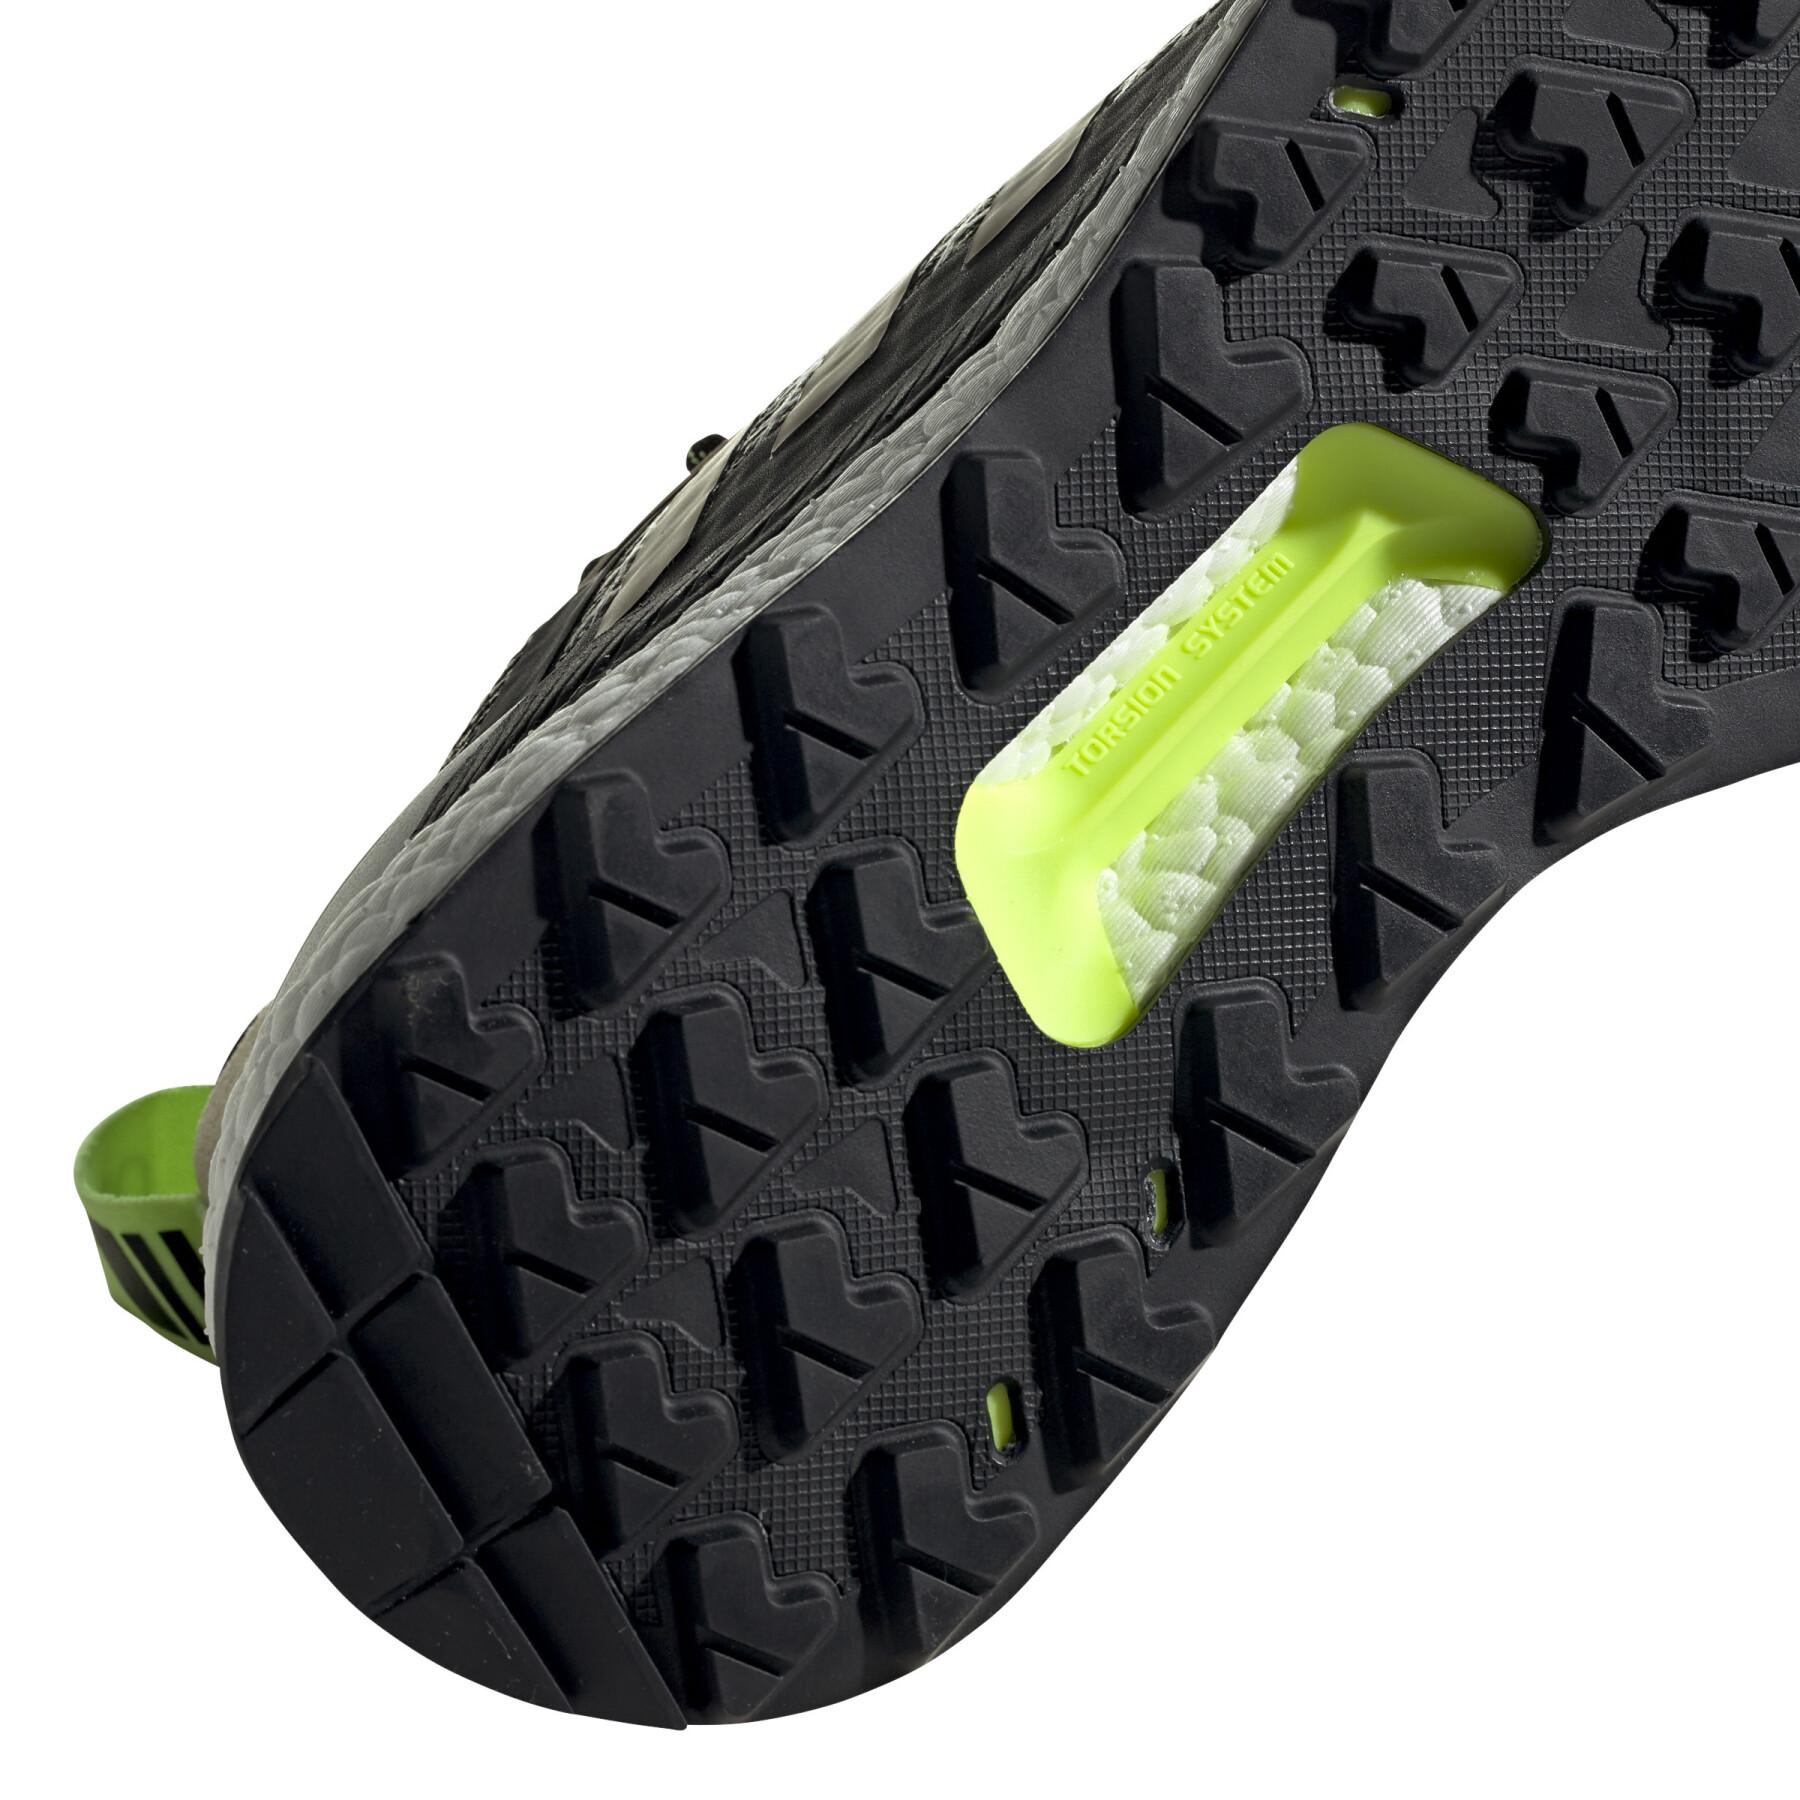 Hiking shoes adidas Terrex Free